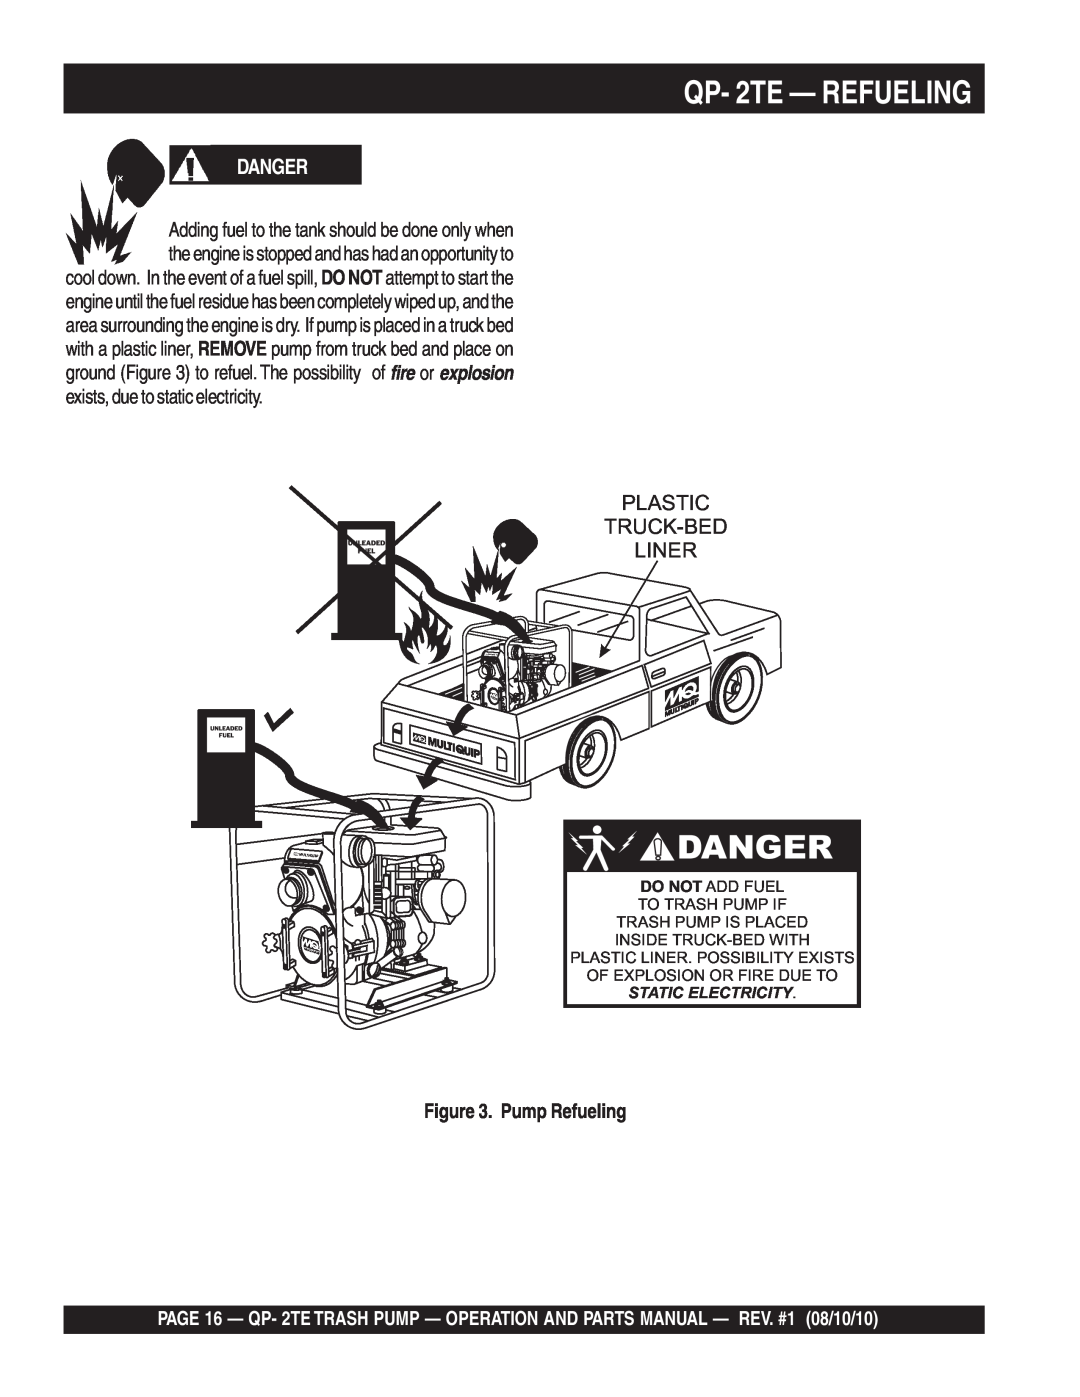 Multiquip Qp-2TE QP- 2TE - REFUELING, Danger, Plastic Truck-Bed Liner, Pump Refueling, Do Not Add Fuel To Trash Pump If 